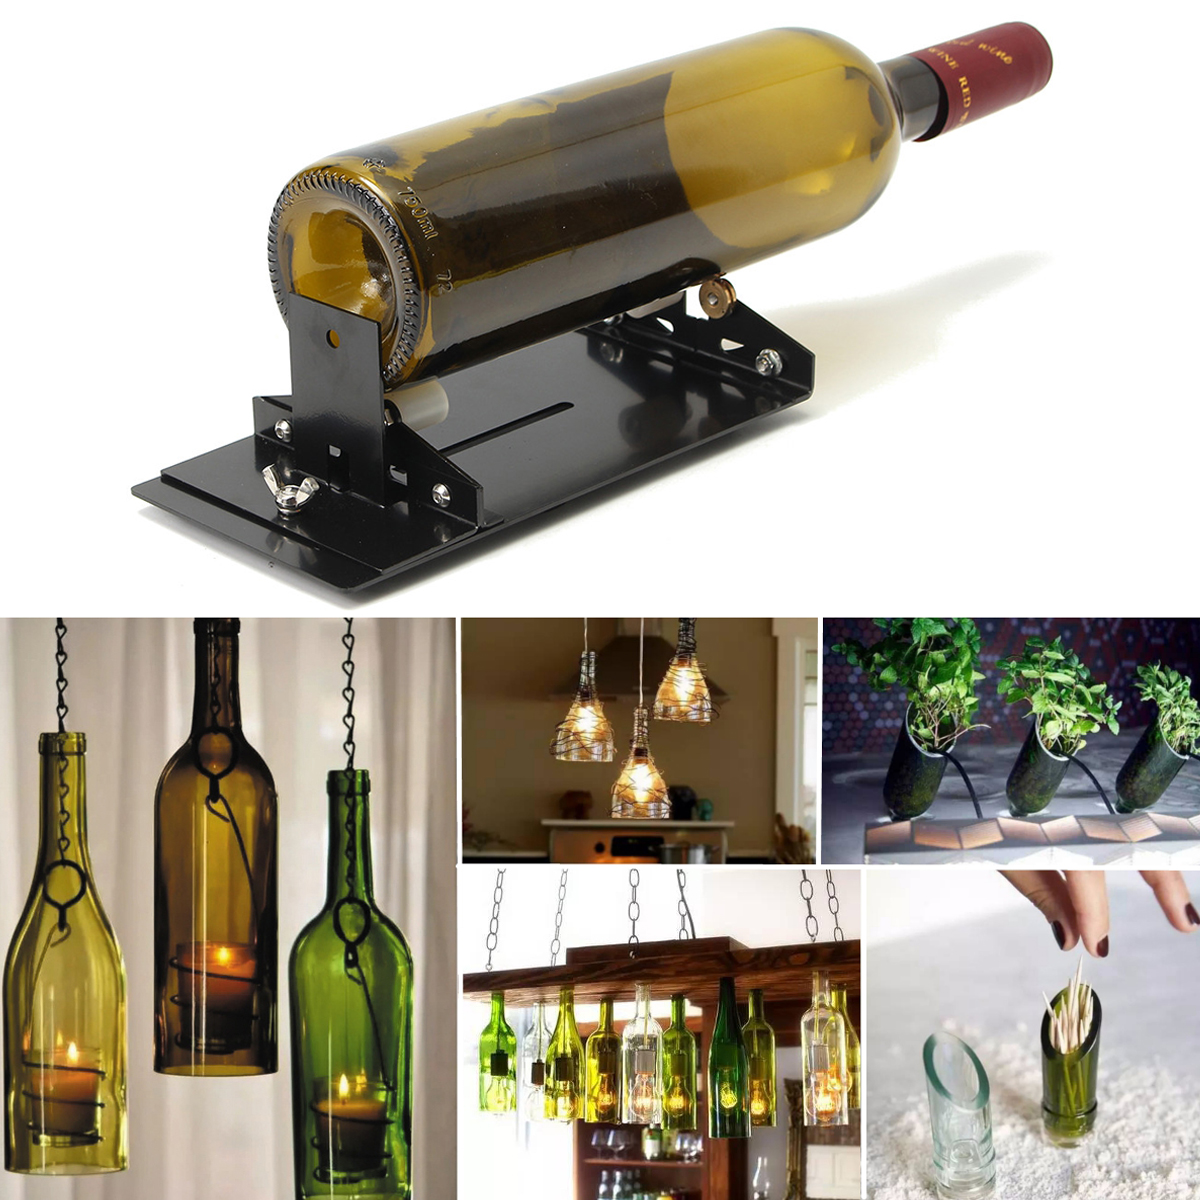 Bottle-Cutter-Kit-Glass-Cutting-Machine-Tool-Jar-Wine-Bottle-Recycle-DIY-Craft-1208538-1